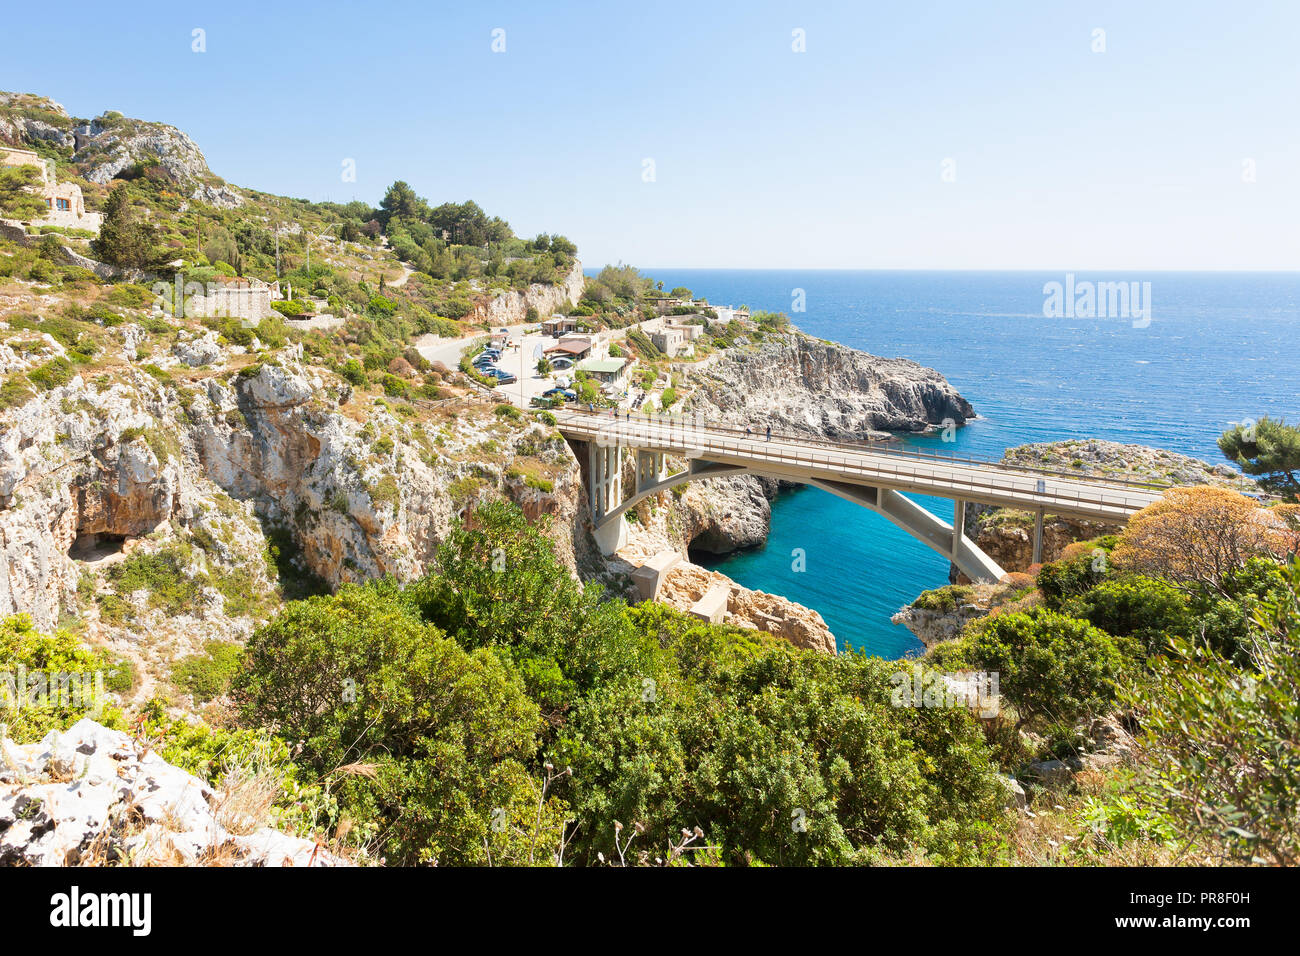 Apulia, Leuca, Italy, Grotto of Ciolo - Country road bridge of Grotto Ciolo Stock Photo